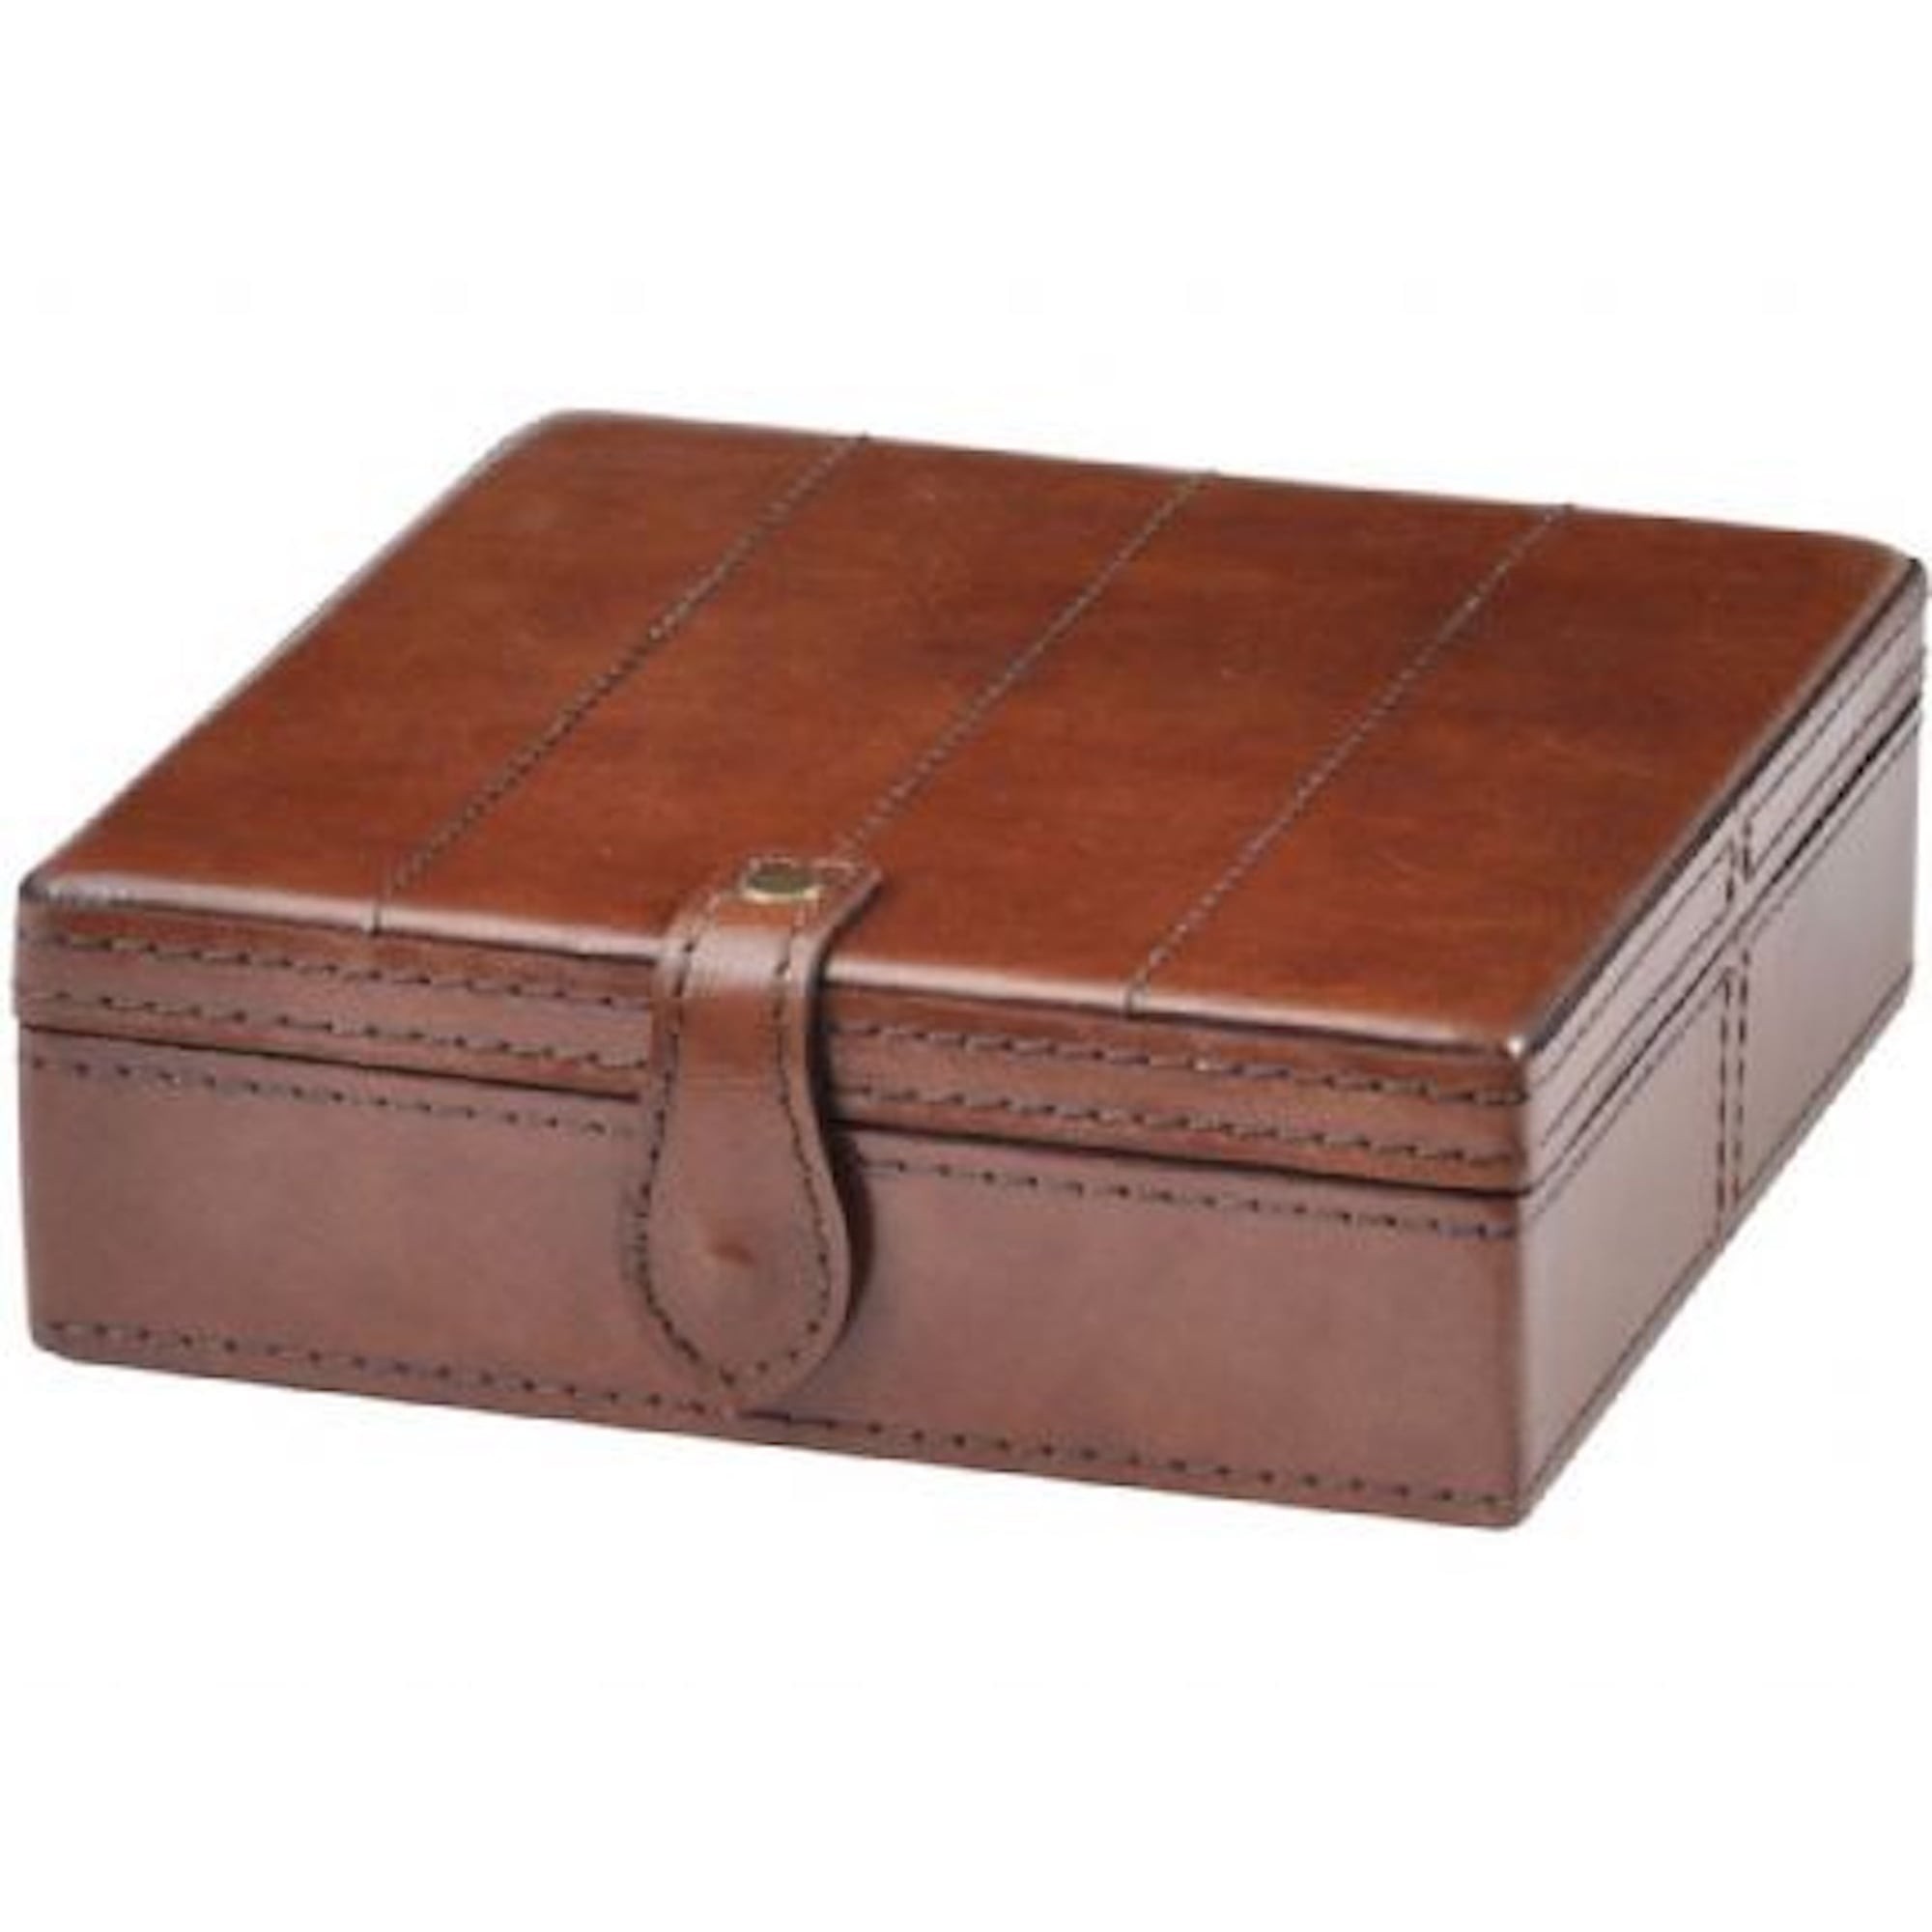 Maroon leather jewellery Box